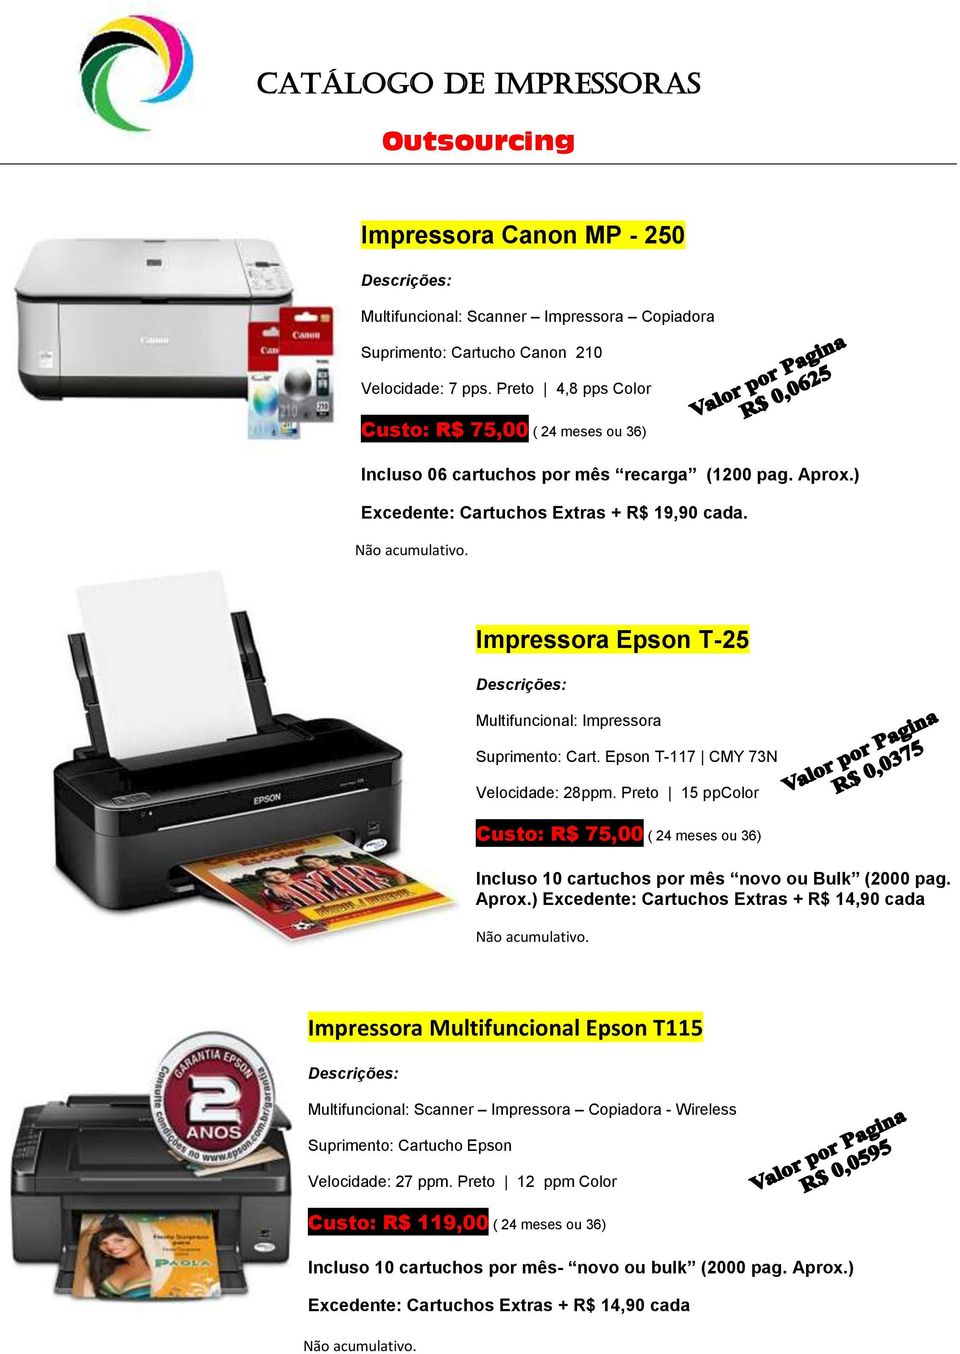 Impressora Epson T-25 Multifuncional: Impressora Suprimento: Cart. Epson T-117 CMY 73N Velocidade: 28ppm.